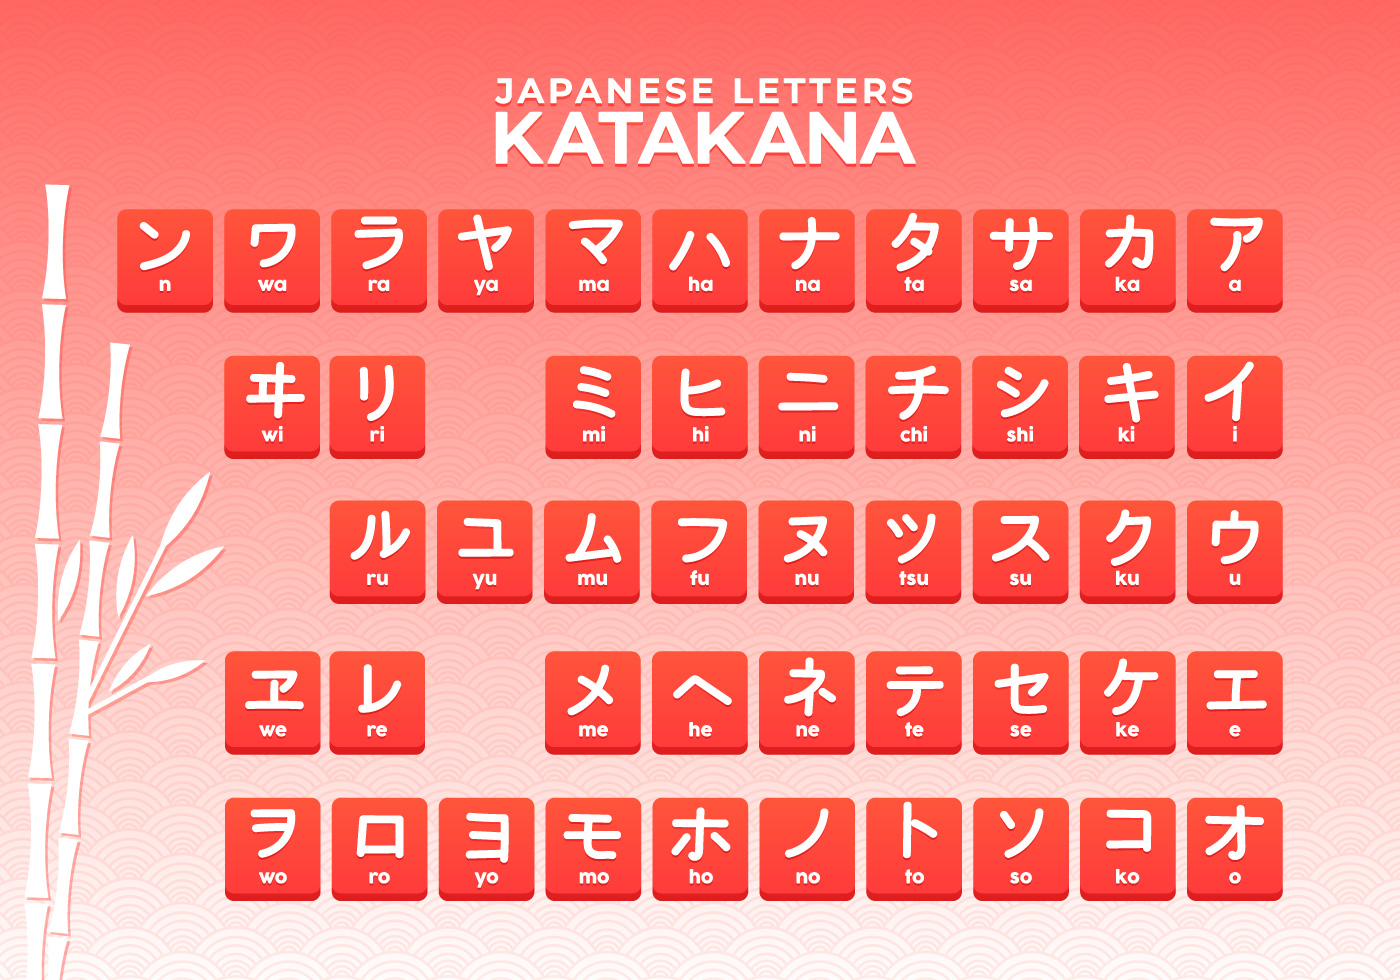 Japanese Letters Katakana Alphabet - Download Free Vectors, Clipart ...